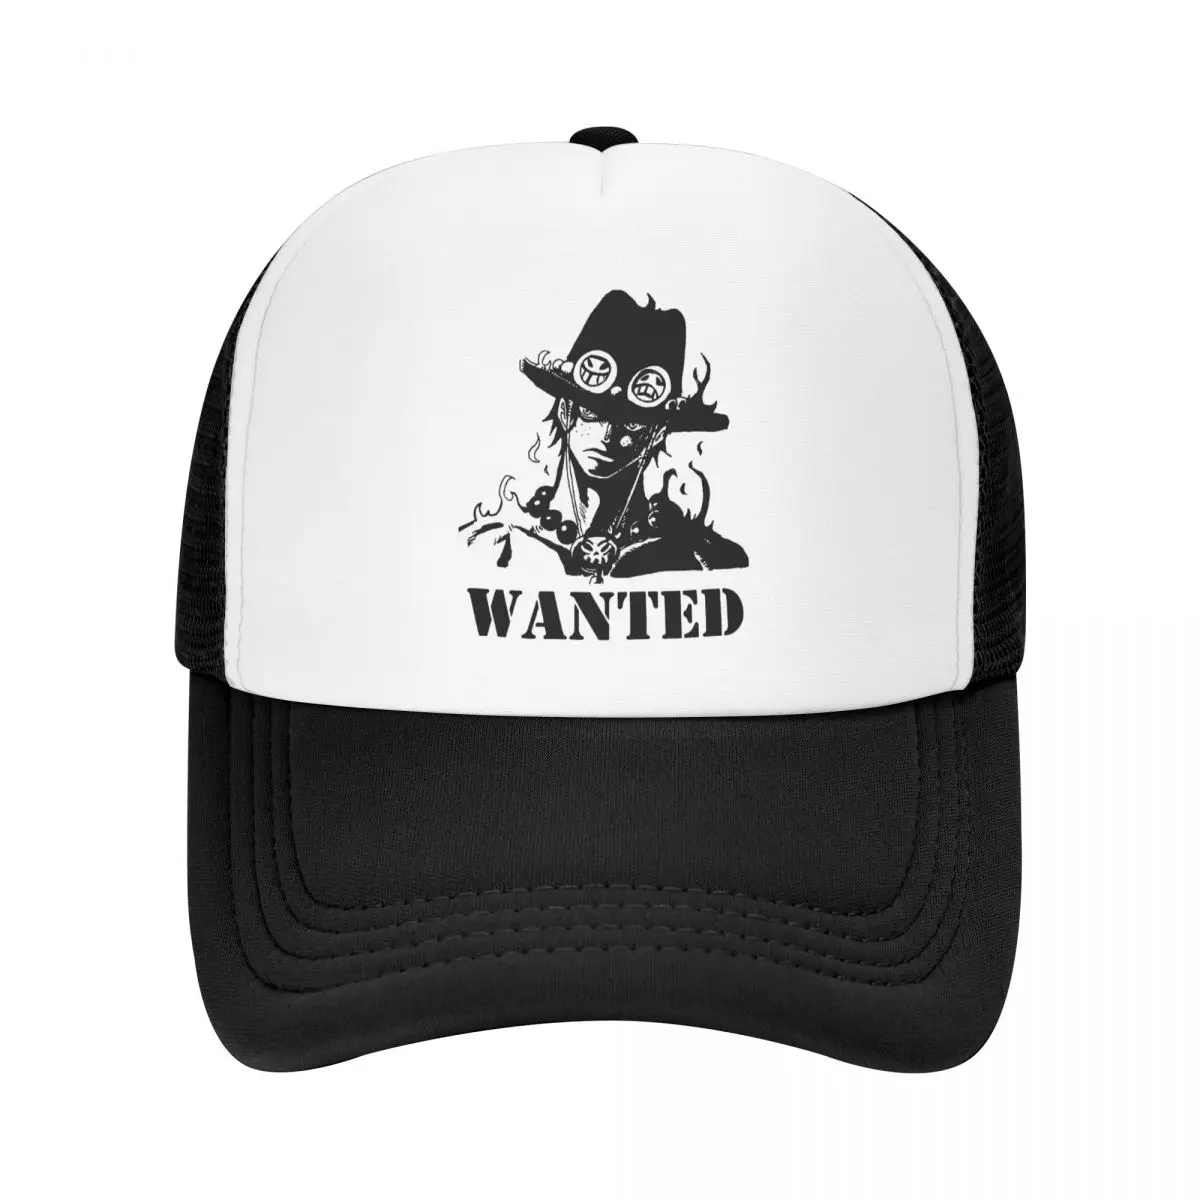 Sombreros de camionero Portgas D Ace Wanted One Piece, gorra de béisbol de red de malla de Anime para hombres y mujeres, gorras Snapback Kpop, ropa de calle